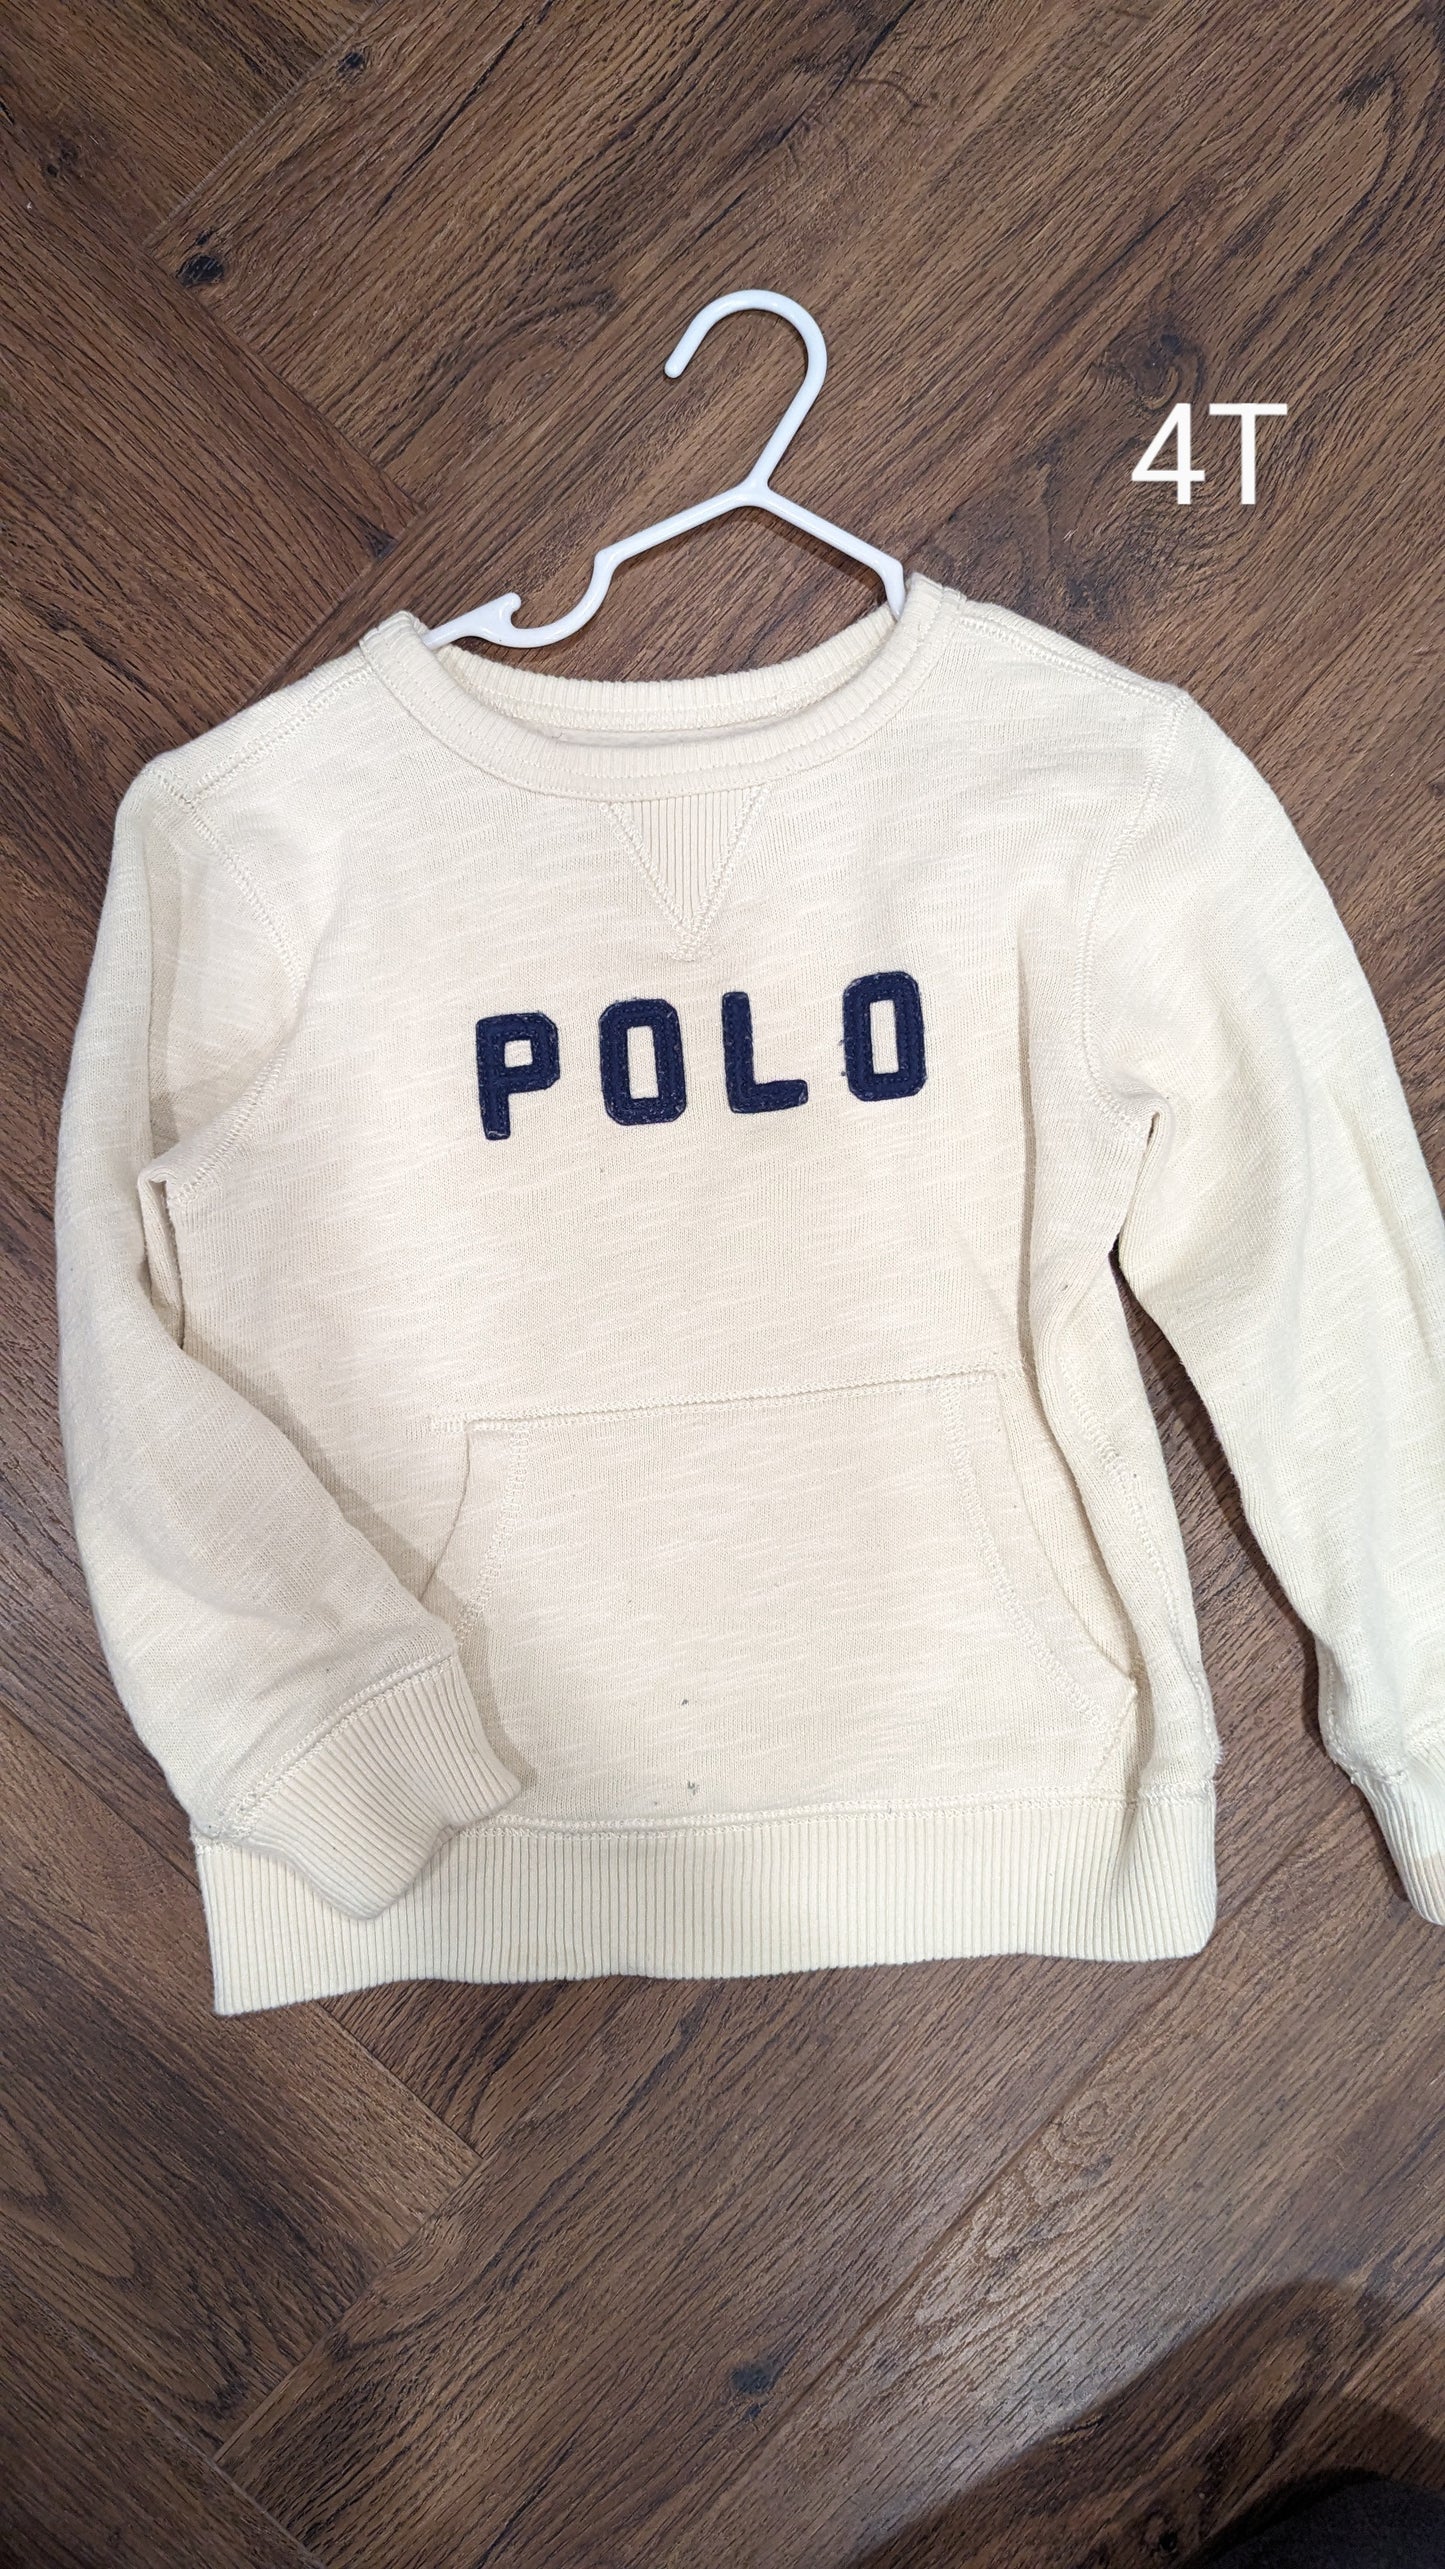 4T Polo white sweater